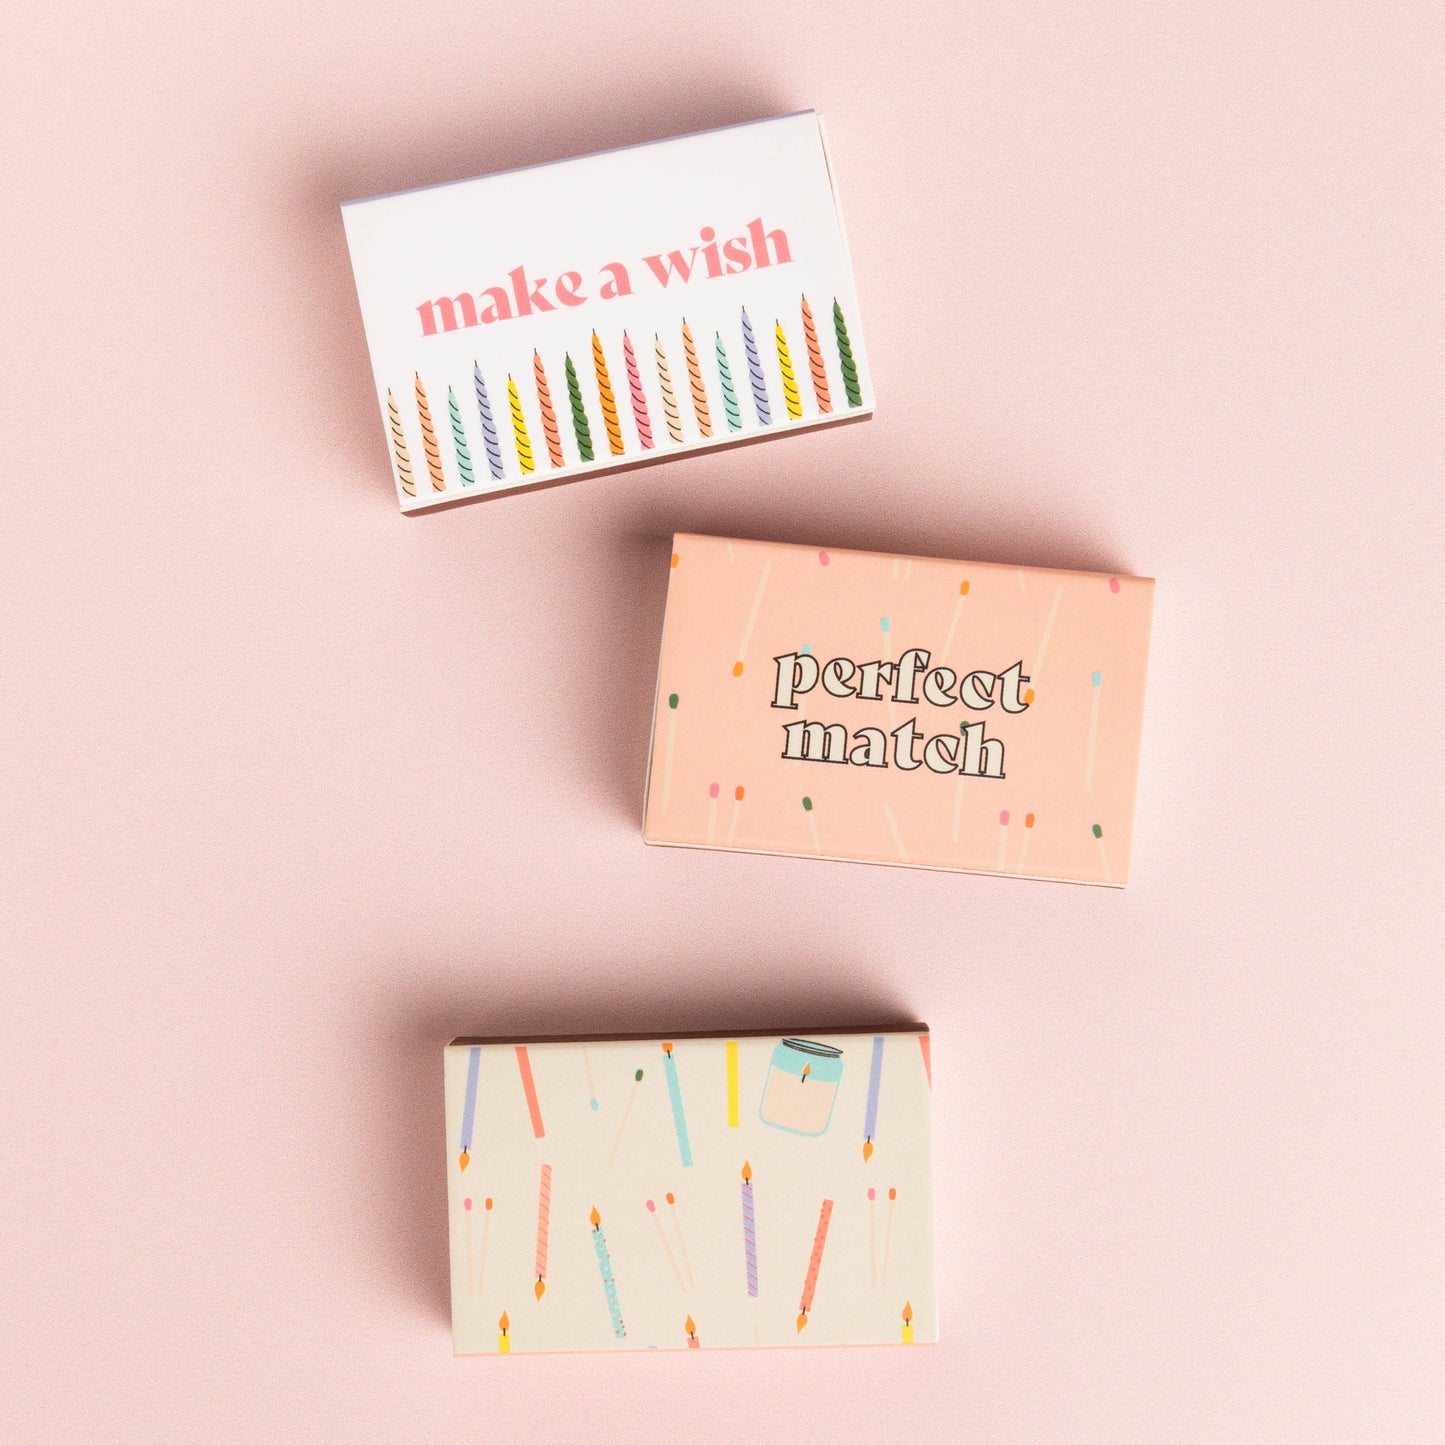 Decorative Matchbox with Colorful Matchsticks: Make A Wish